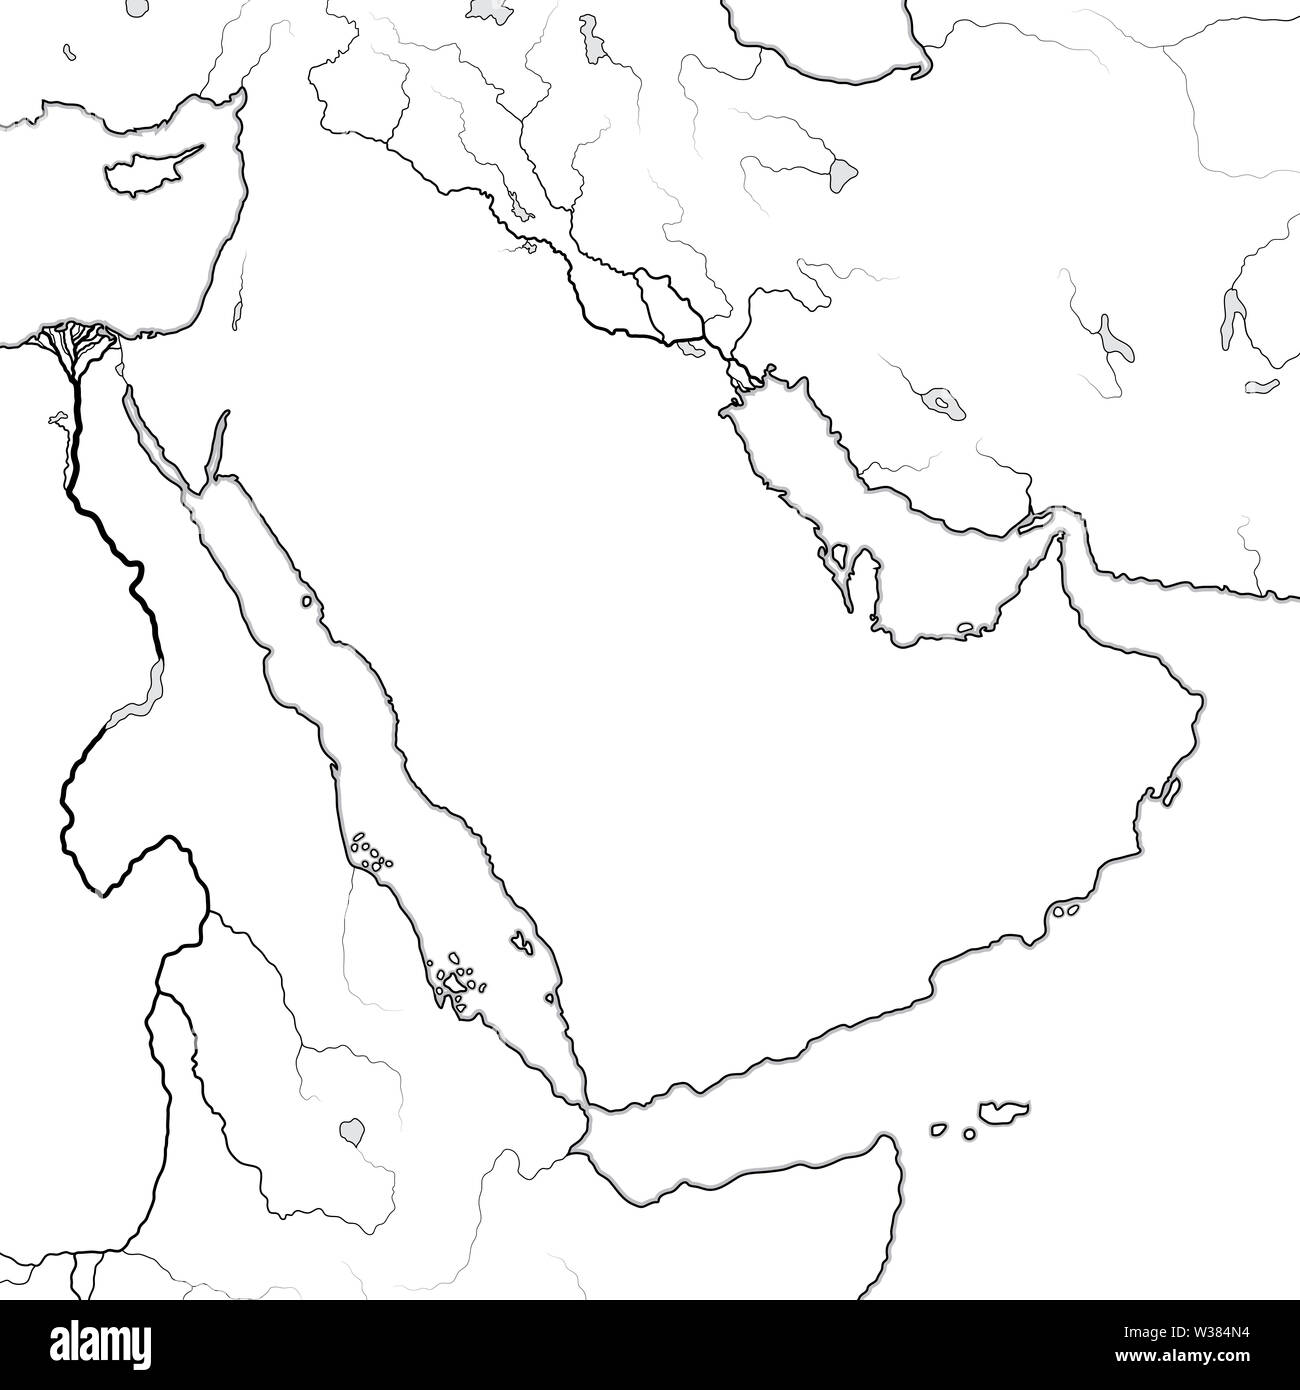 Weltkarte der ARABISCHE HALBINSEL: Im Nahen Osten, der arabischen Welt, die Emirate, Saudi Arabien, Irak, Syrien, Mesopotamien, Persien, Persischer Golf, Rotes Meer. Stockfoto